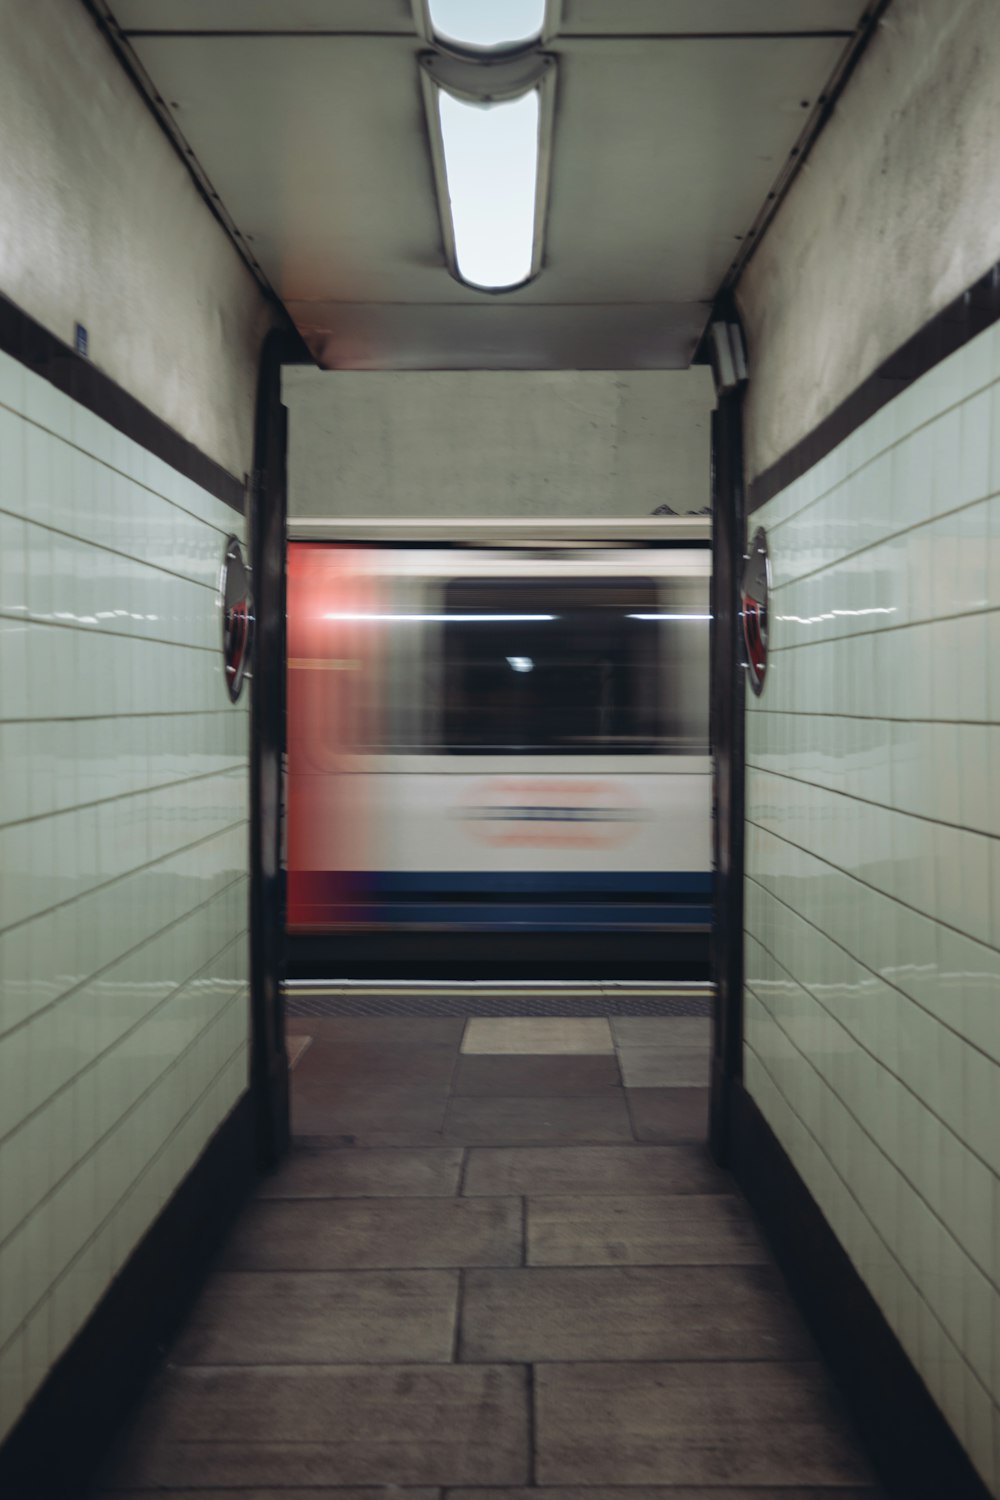 a subway train passing through a subway station